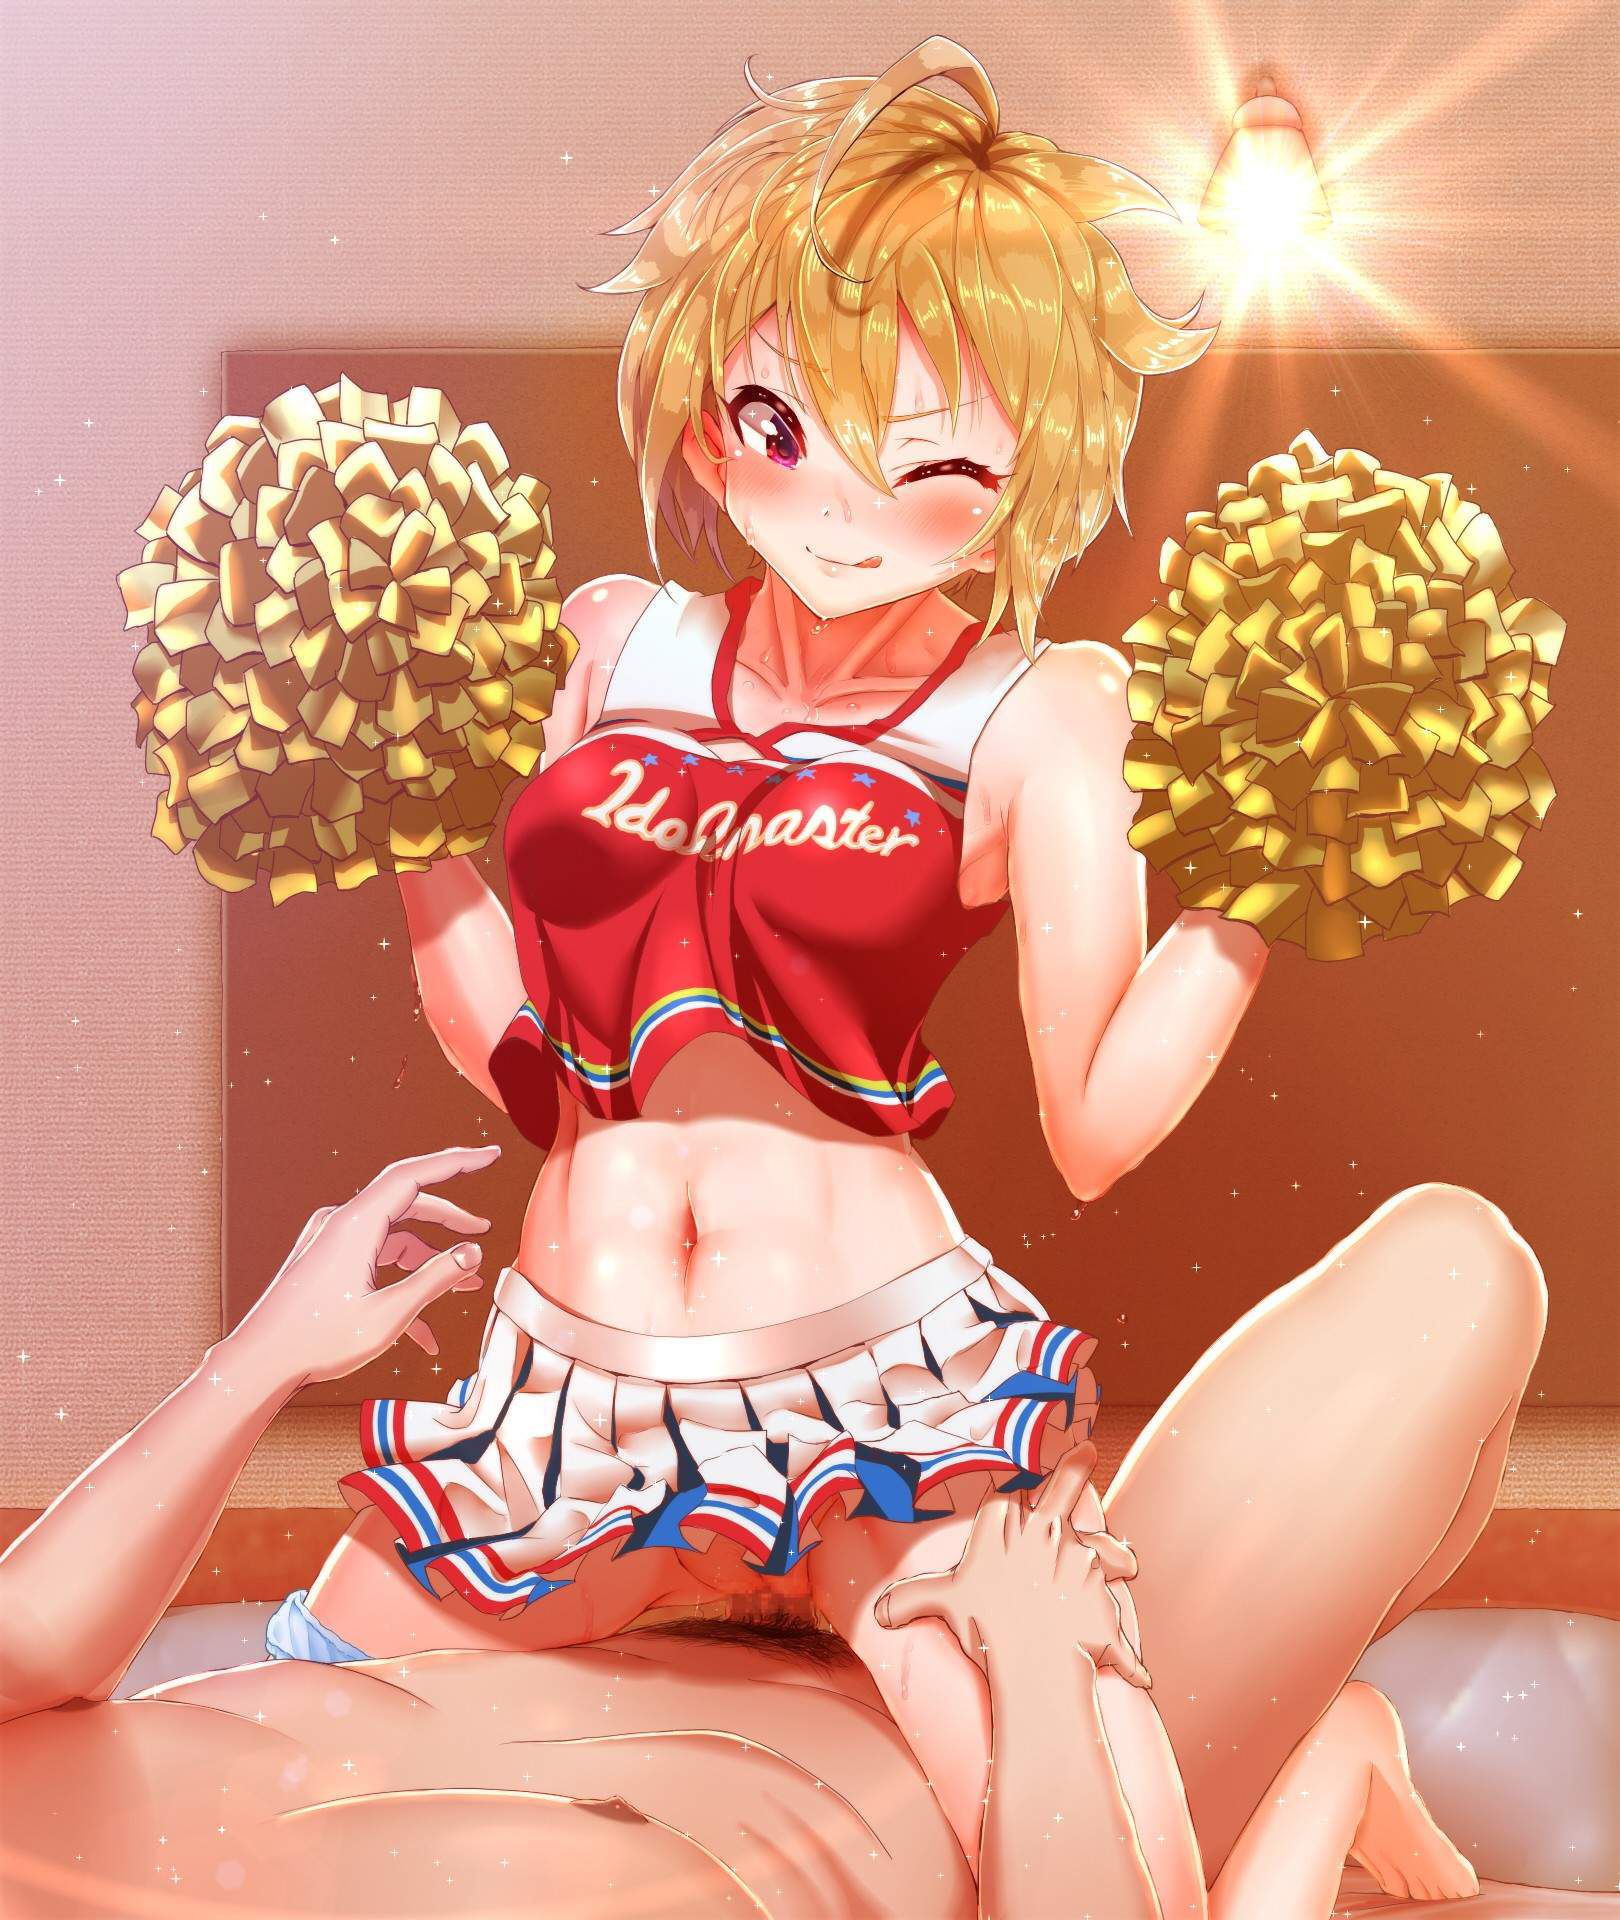 Erotic image of cheerleader please 11